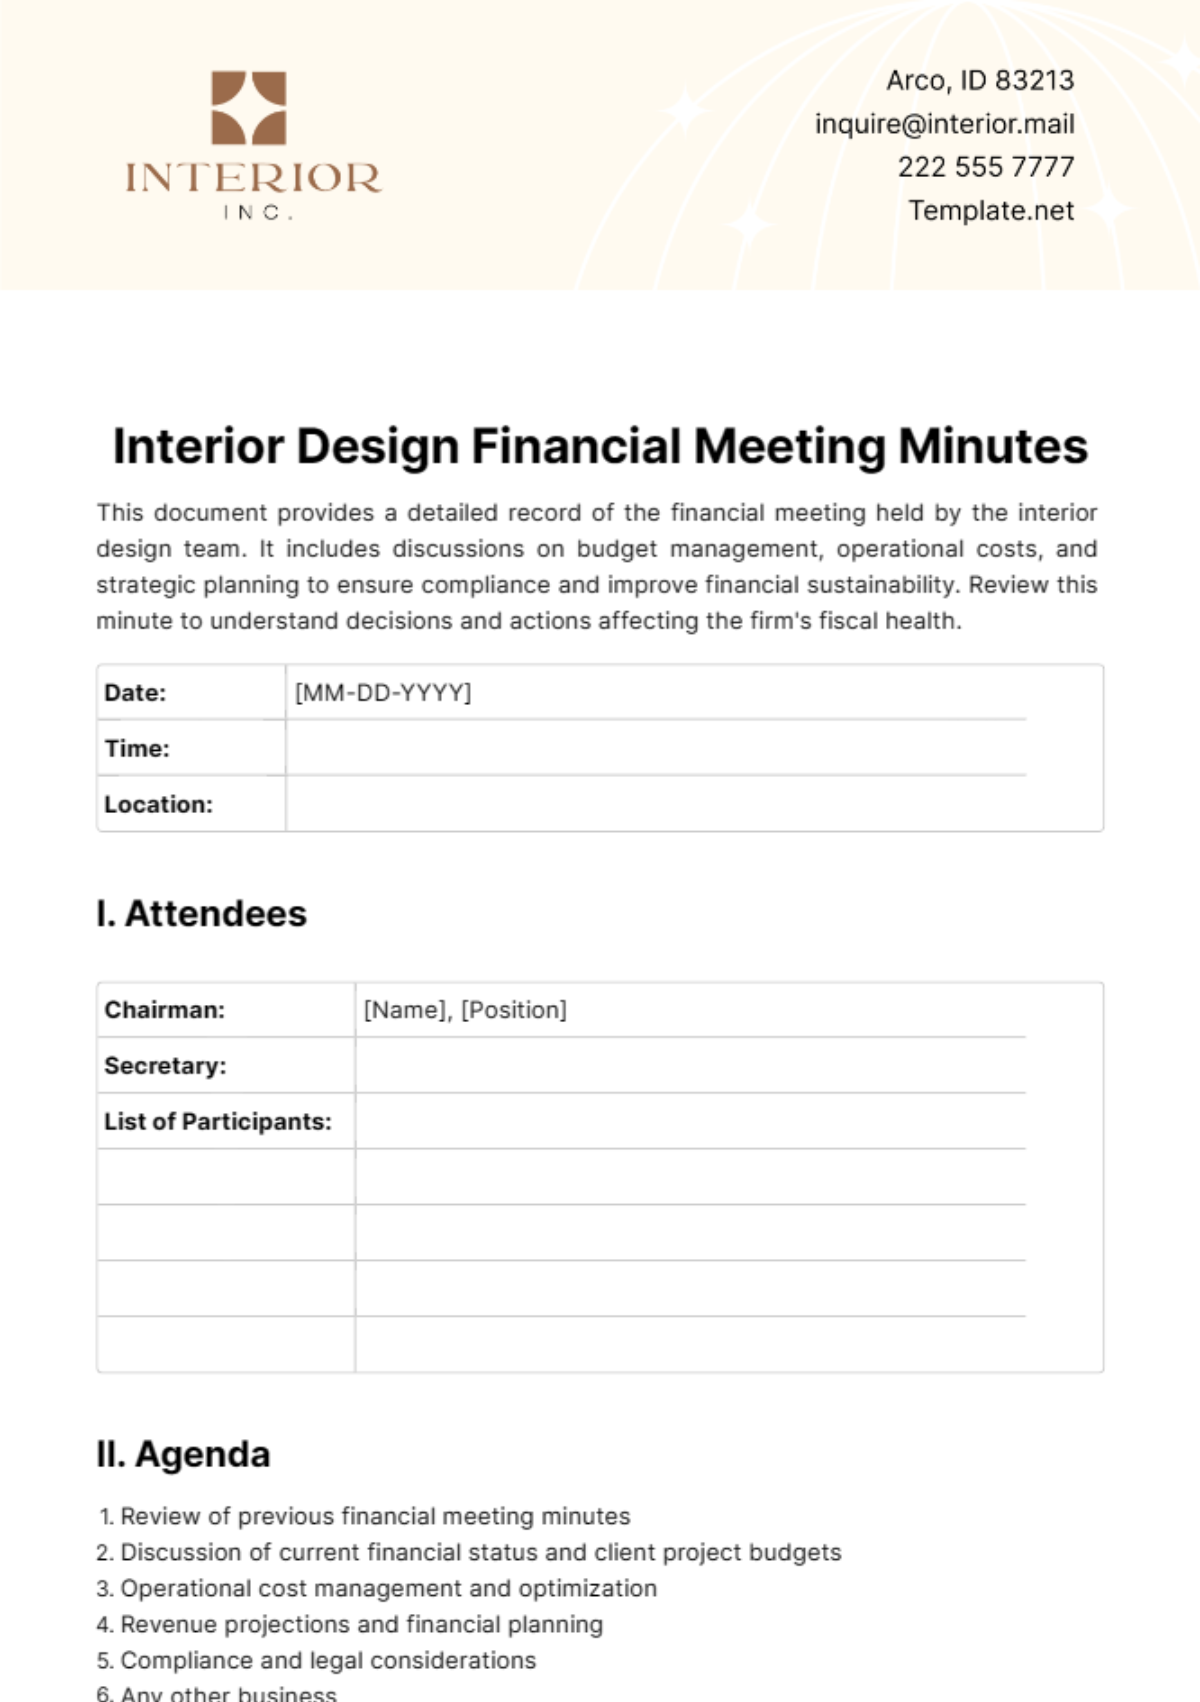 Interior Design Financial Meeting Minute Template